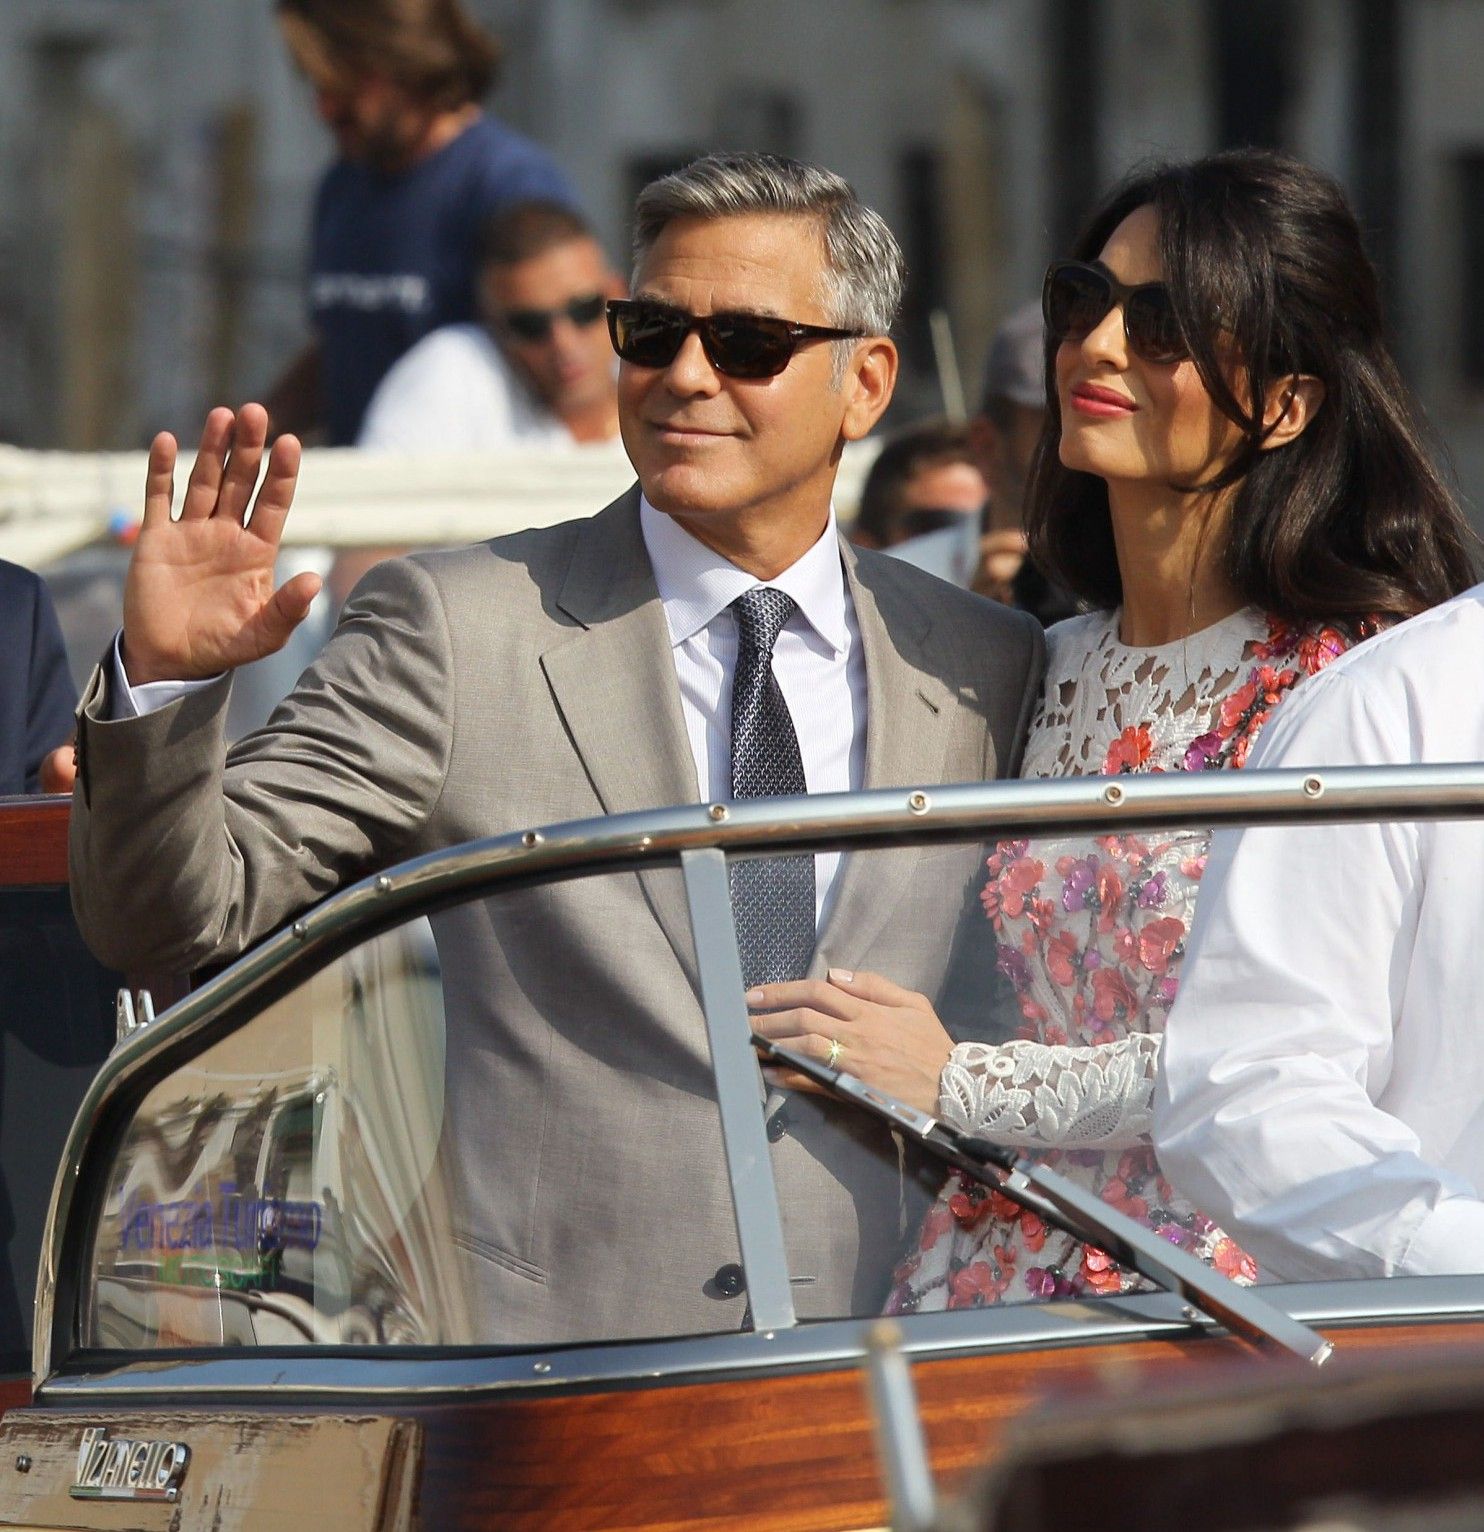 George Clooney wedding style, London Sock Company